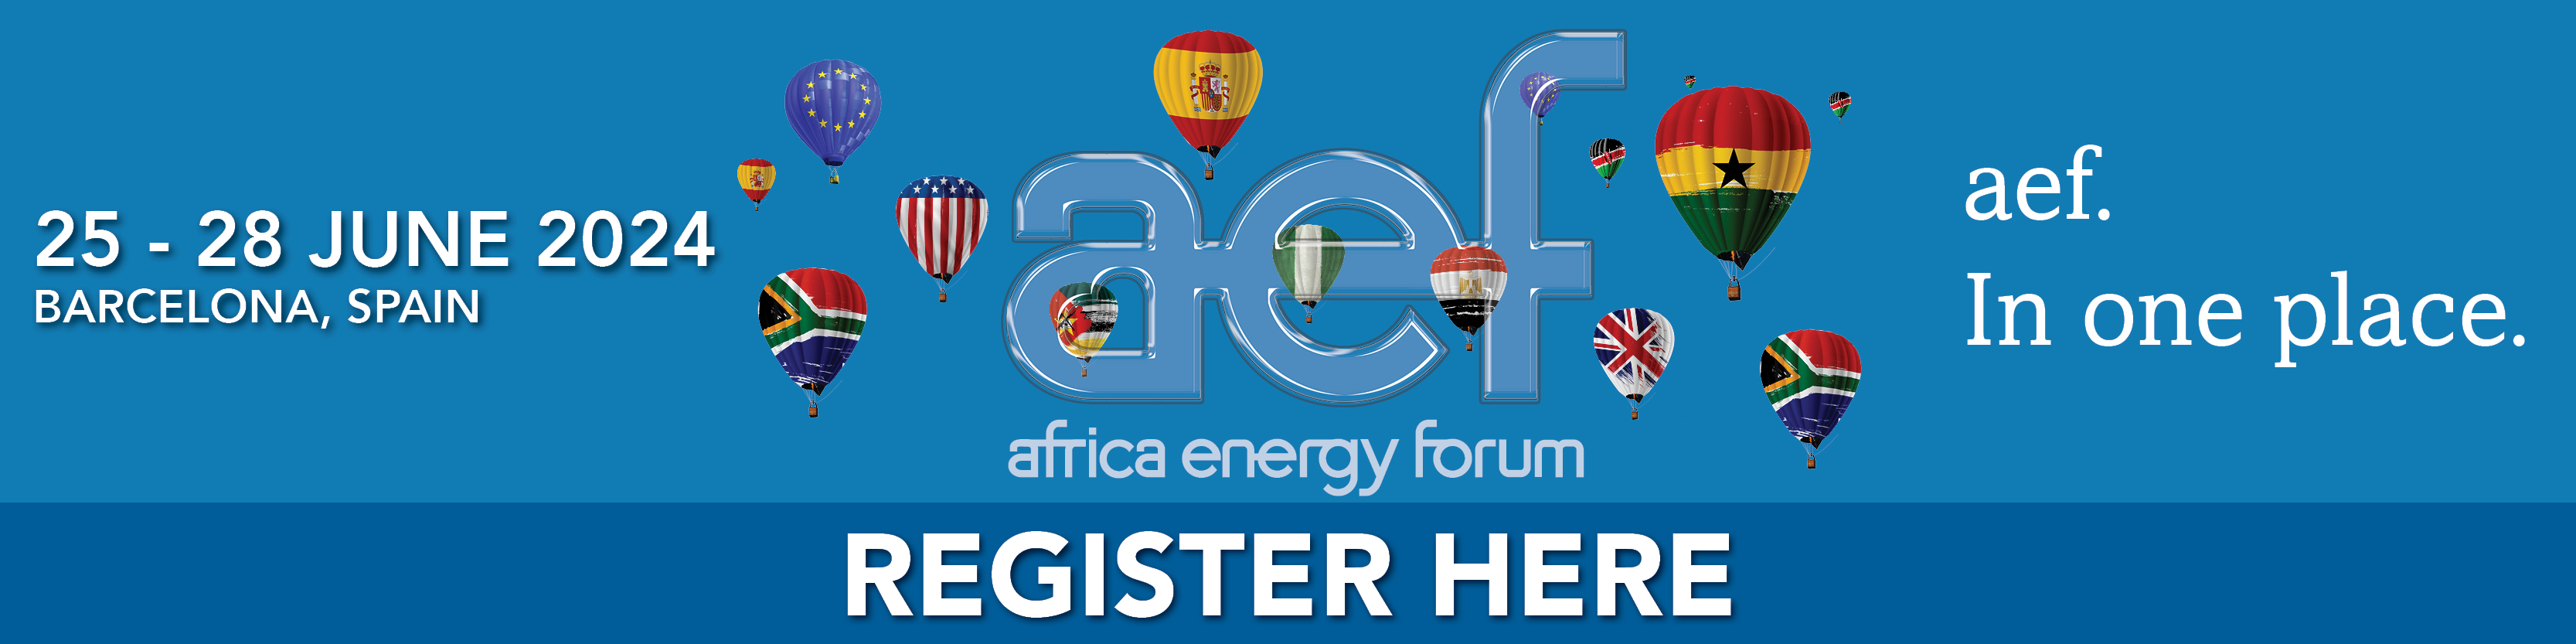 Africa Energy Forum 2024 Registration